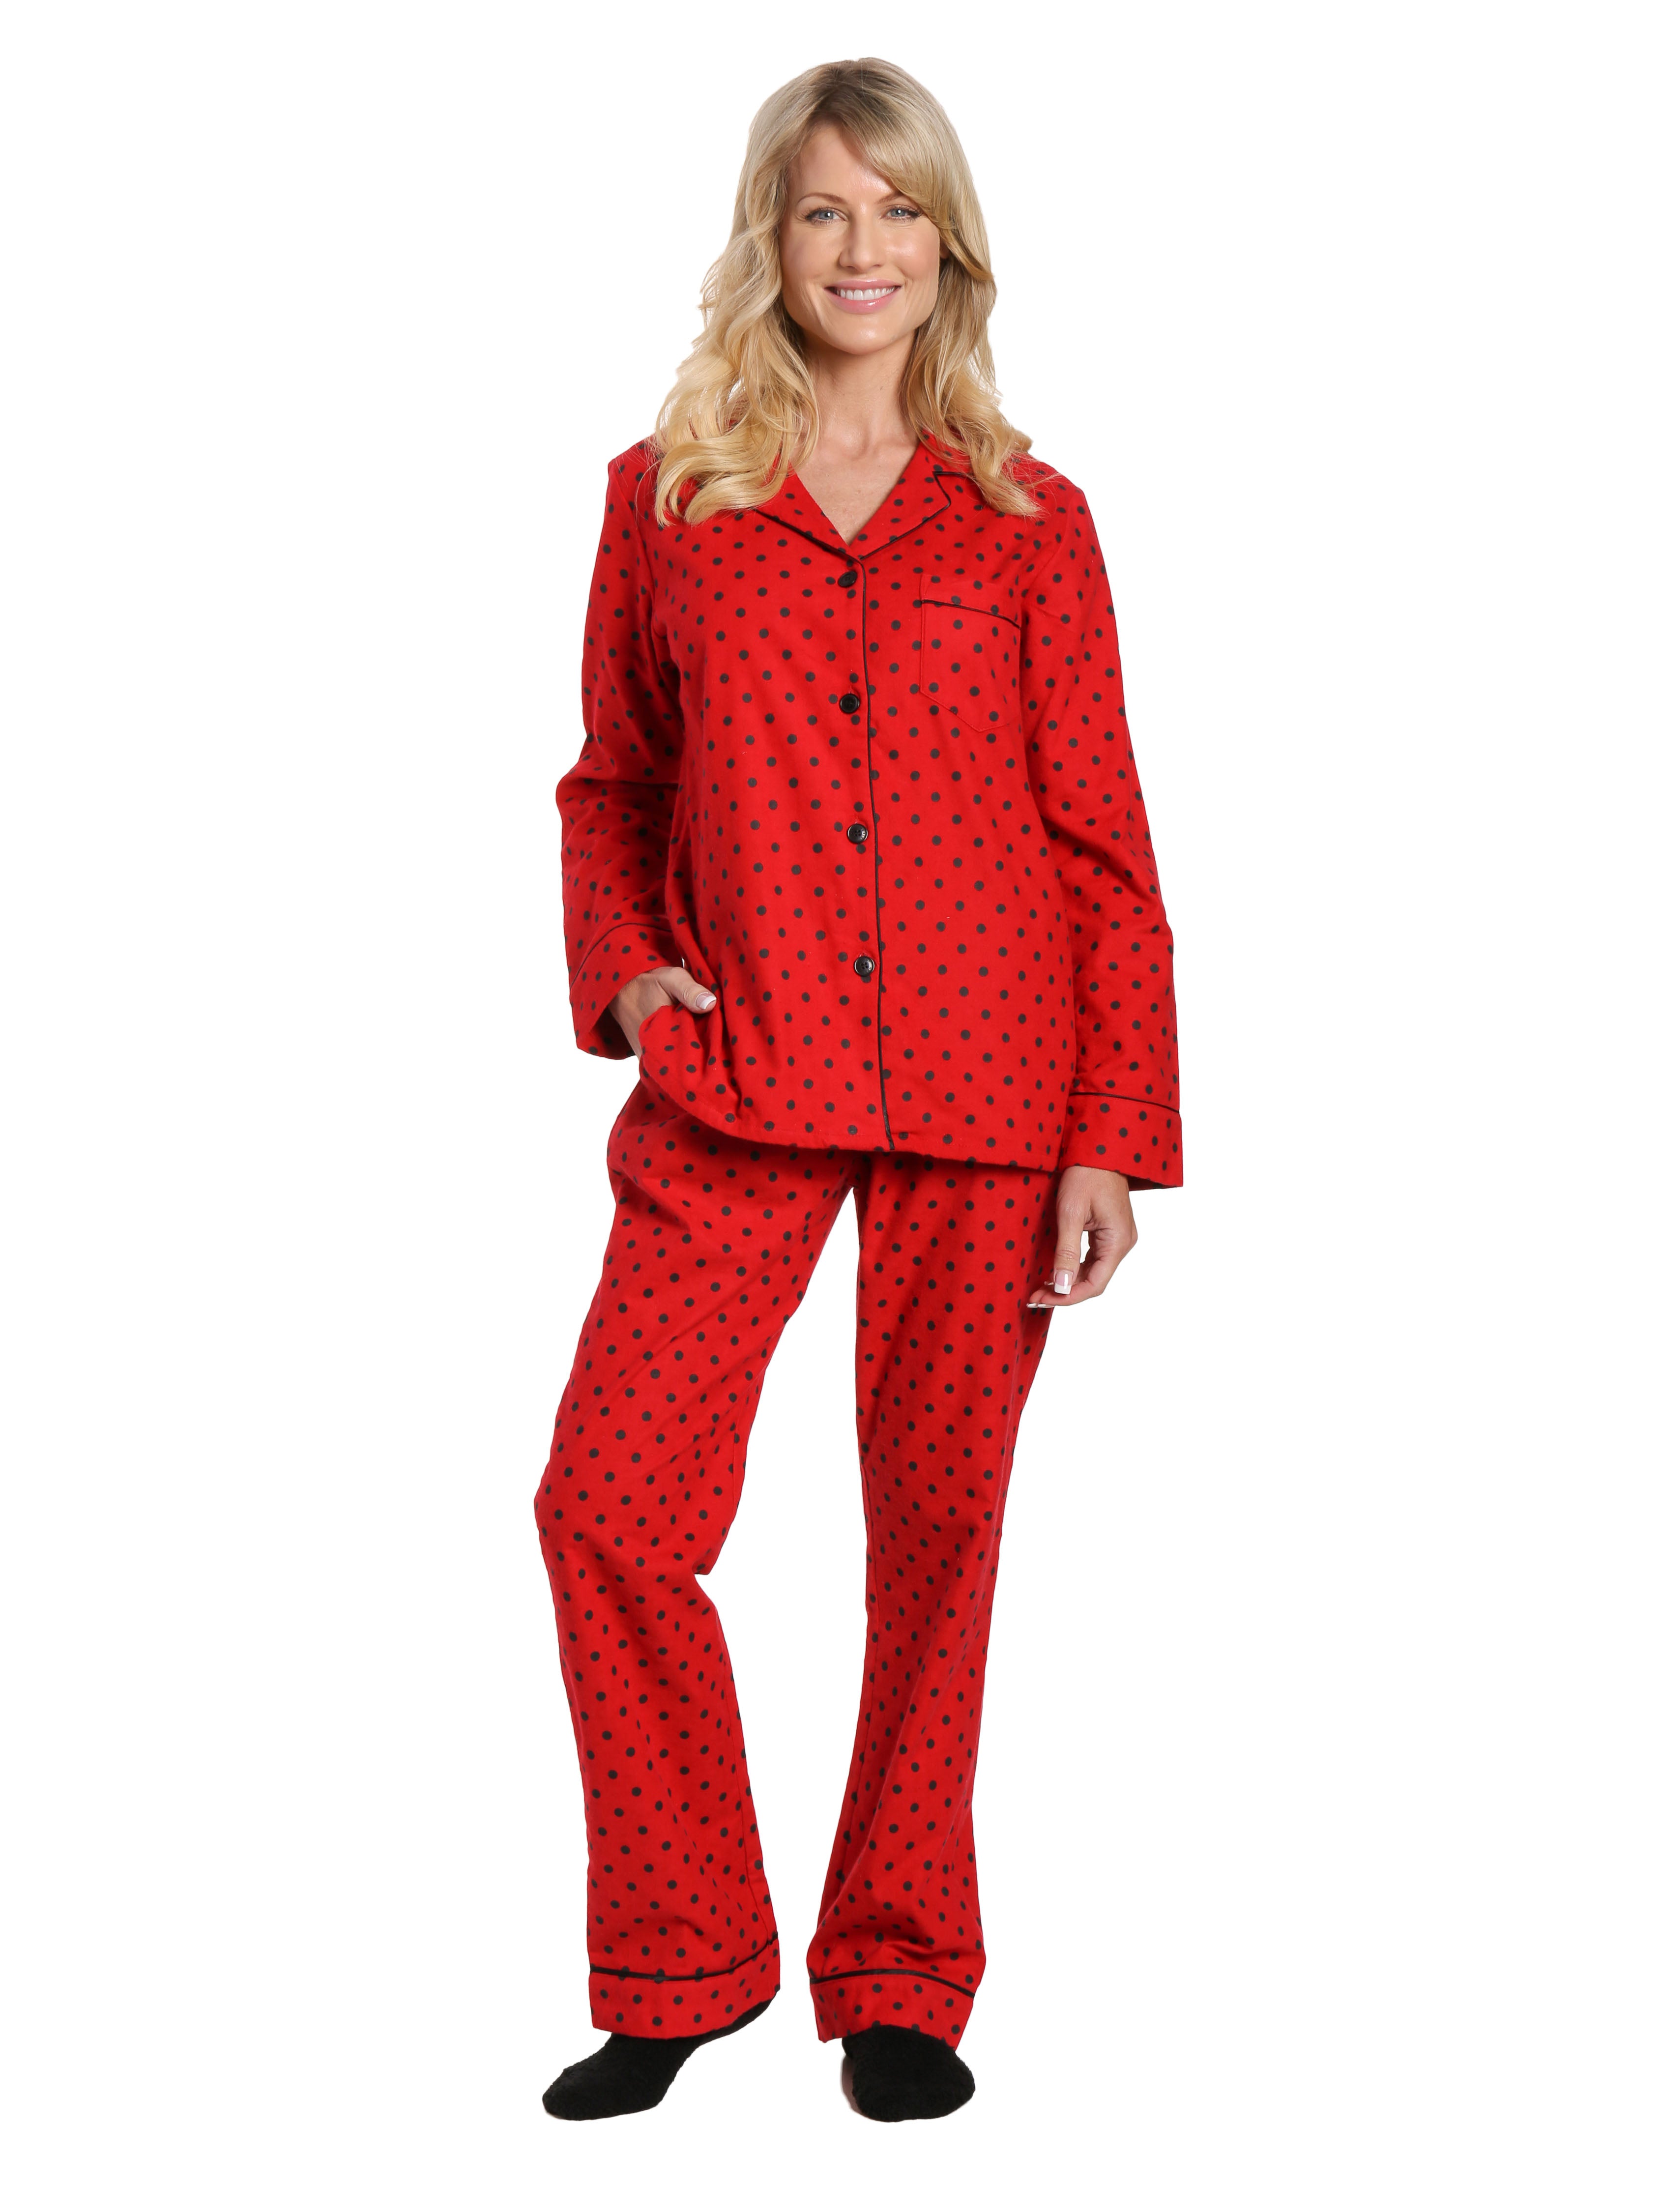 Box Packaged Women's Premium 100% Cotton Flannel Pajama Sleepwear Set - Dots Diva Red-Black